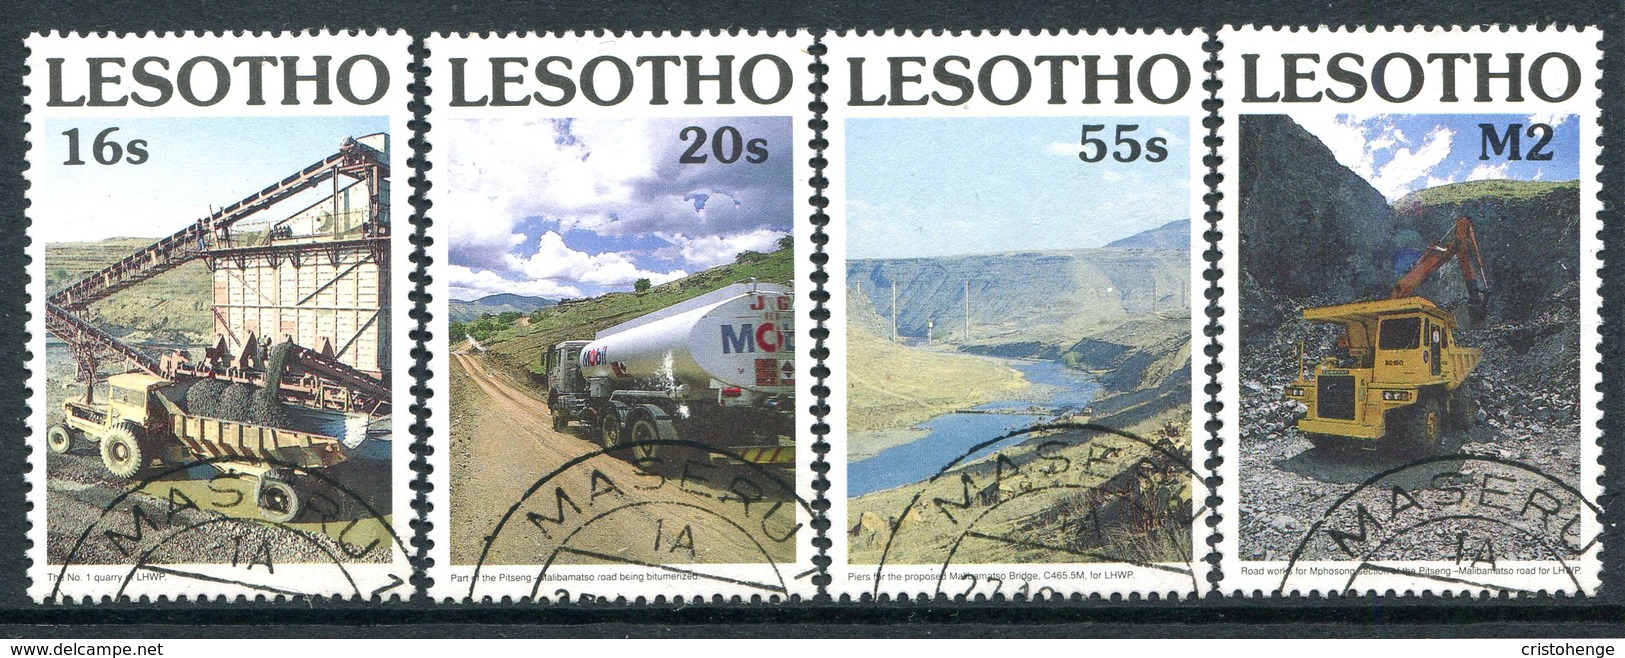 Lesotho 1990 Highlands Water Project Set Used (SG 976-979) - Lesotho (1966-...)